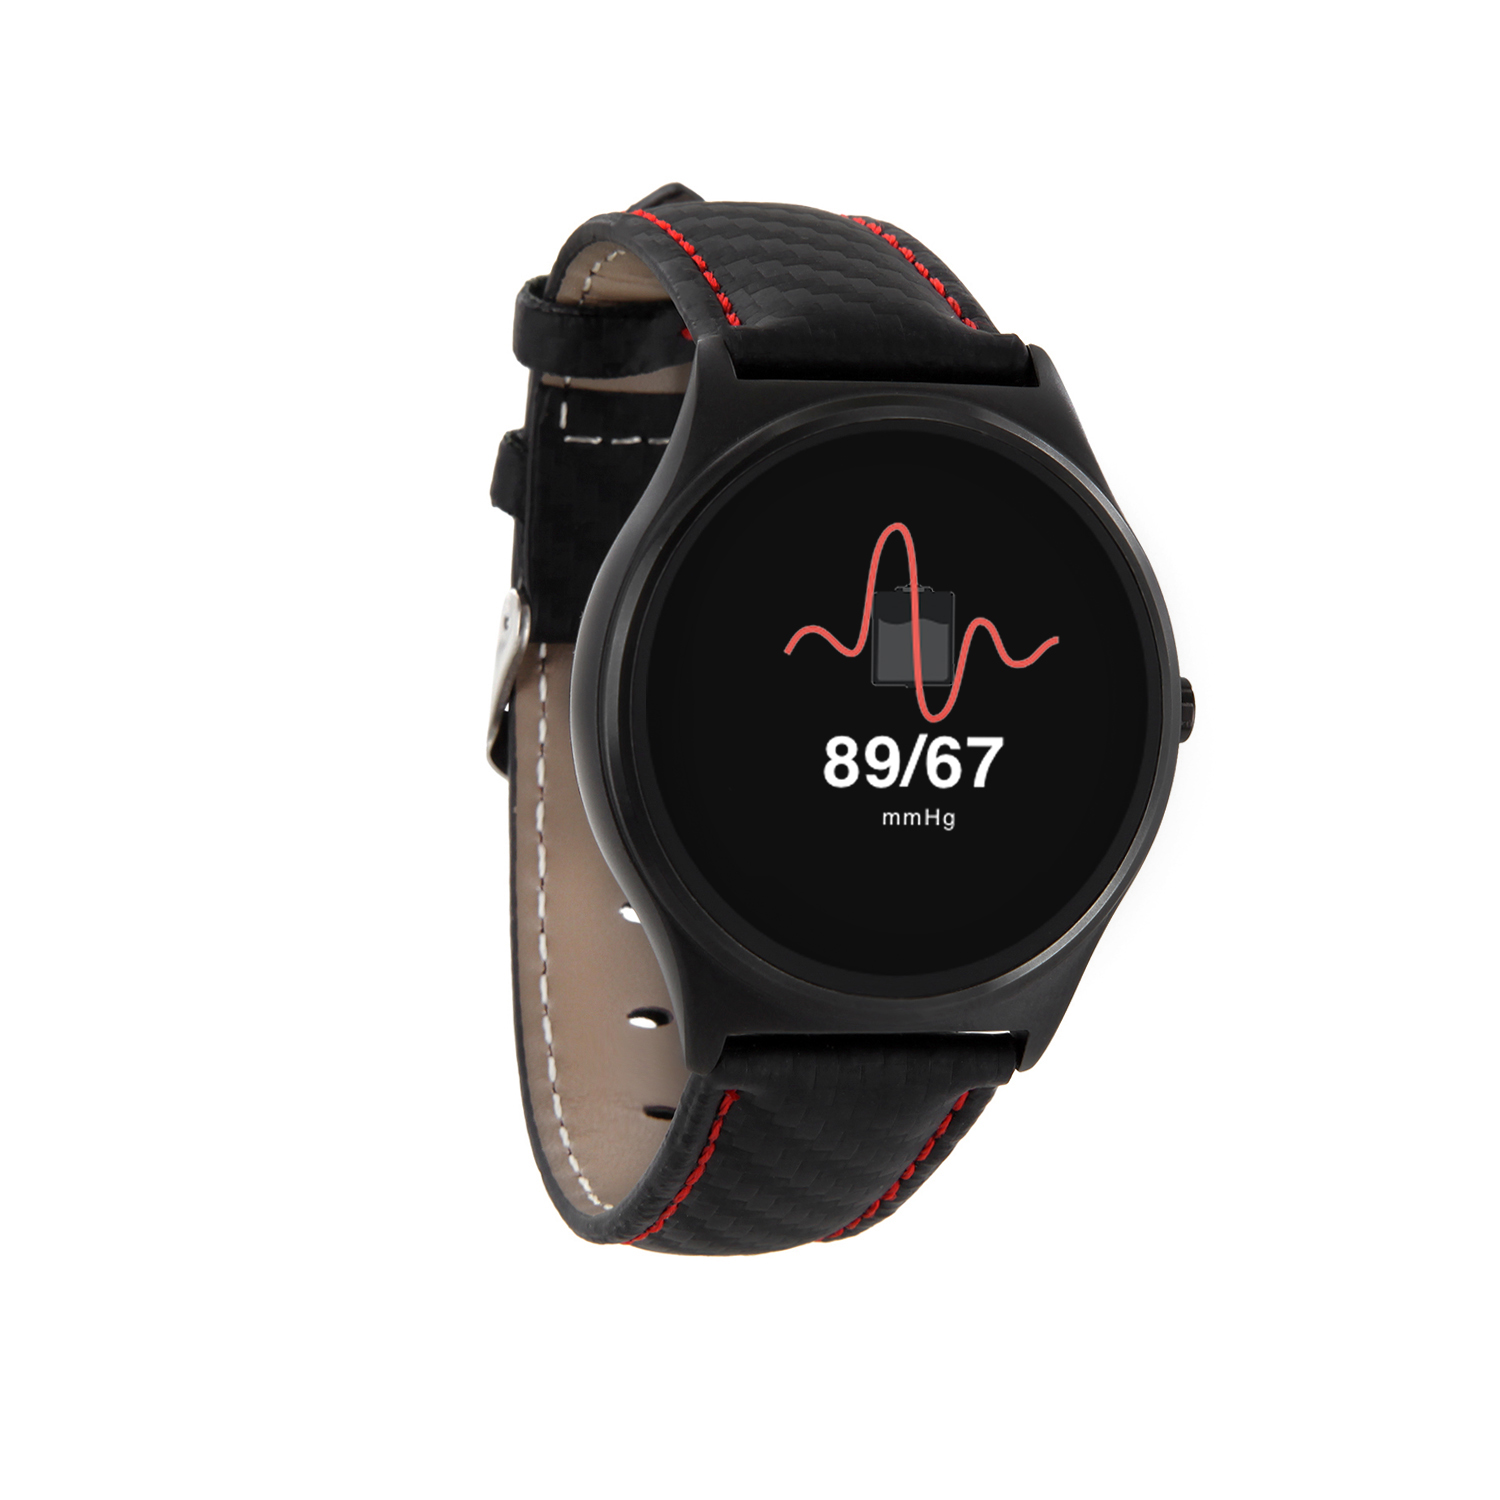 Armband: / Smartwatch CARBON mm Metall II X-WATCH XW Black QIN - 210 PRIME x Gehäuse: 54016 XLYNE mm, Echtleder, Black Red BLACK Chrome Carbon RED 22